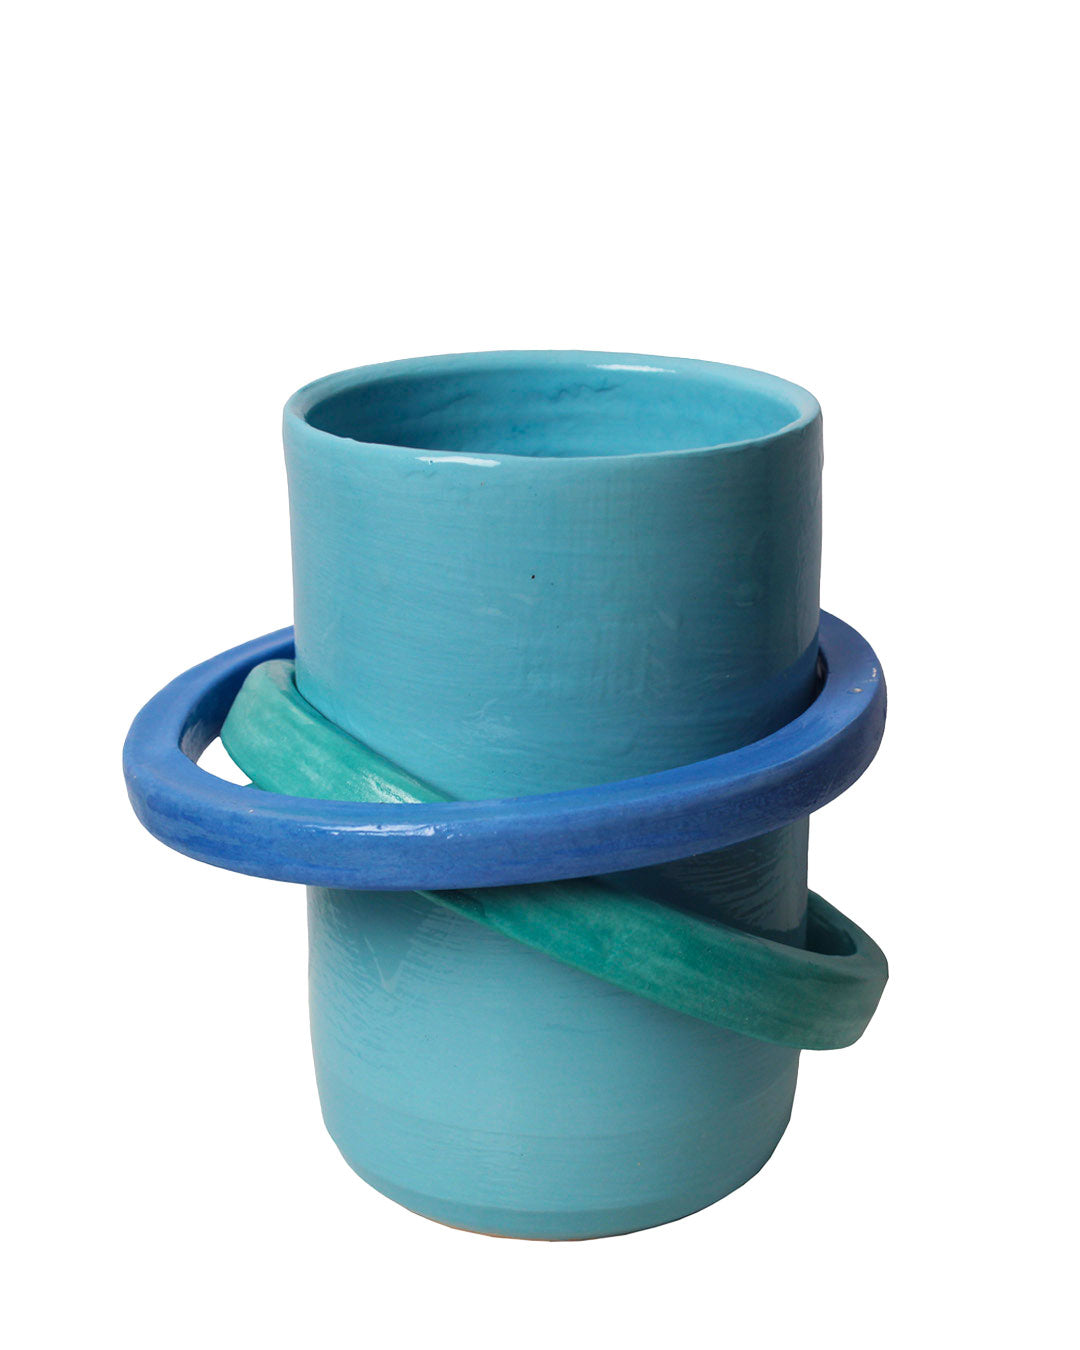 Paduang vase - Bright blue